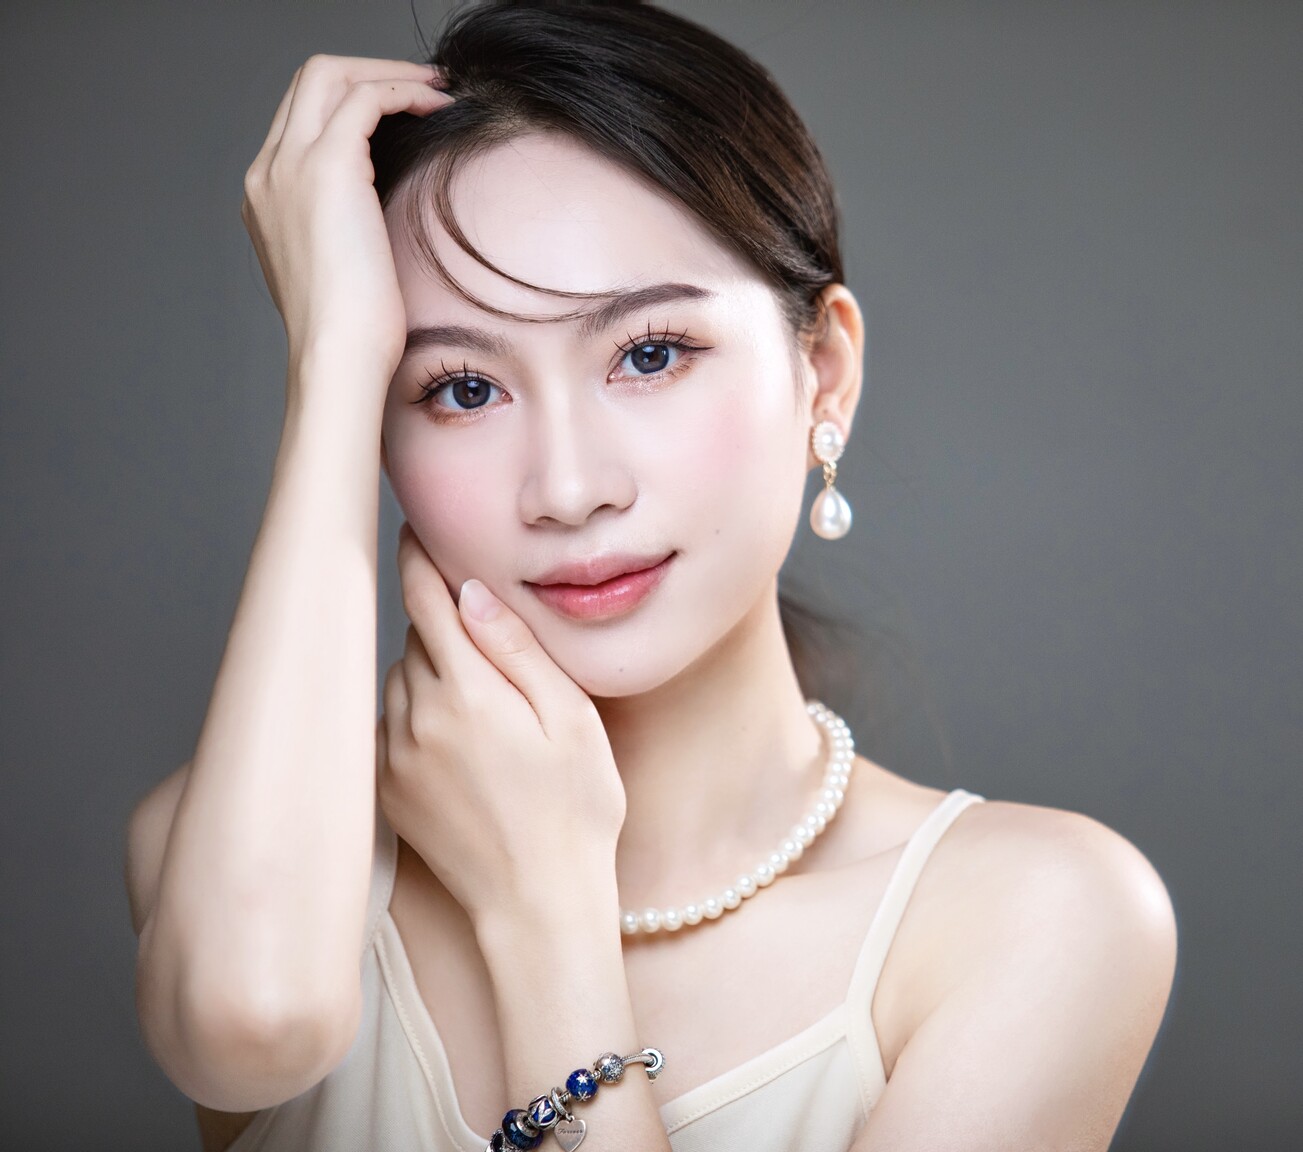 Deng Fei Jun filipino single dating site